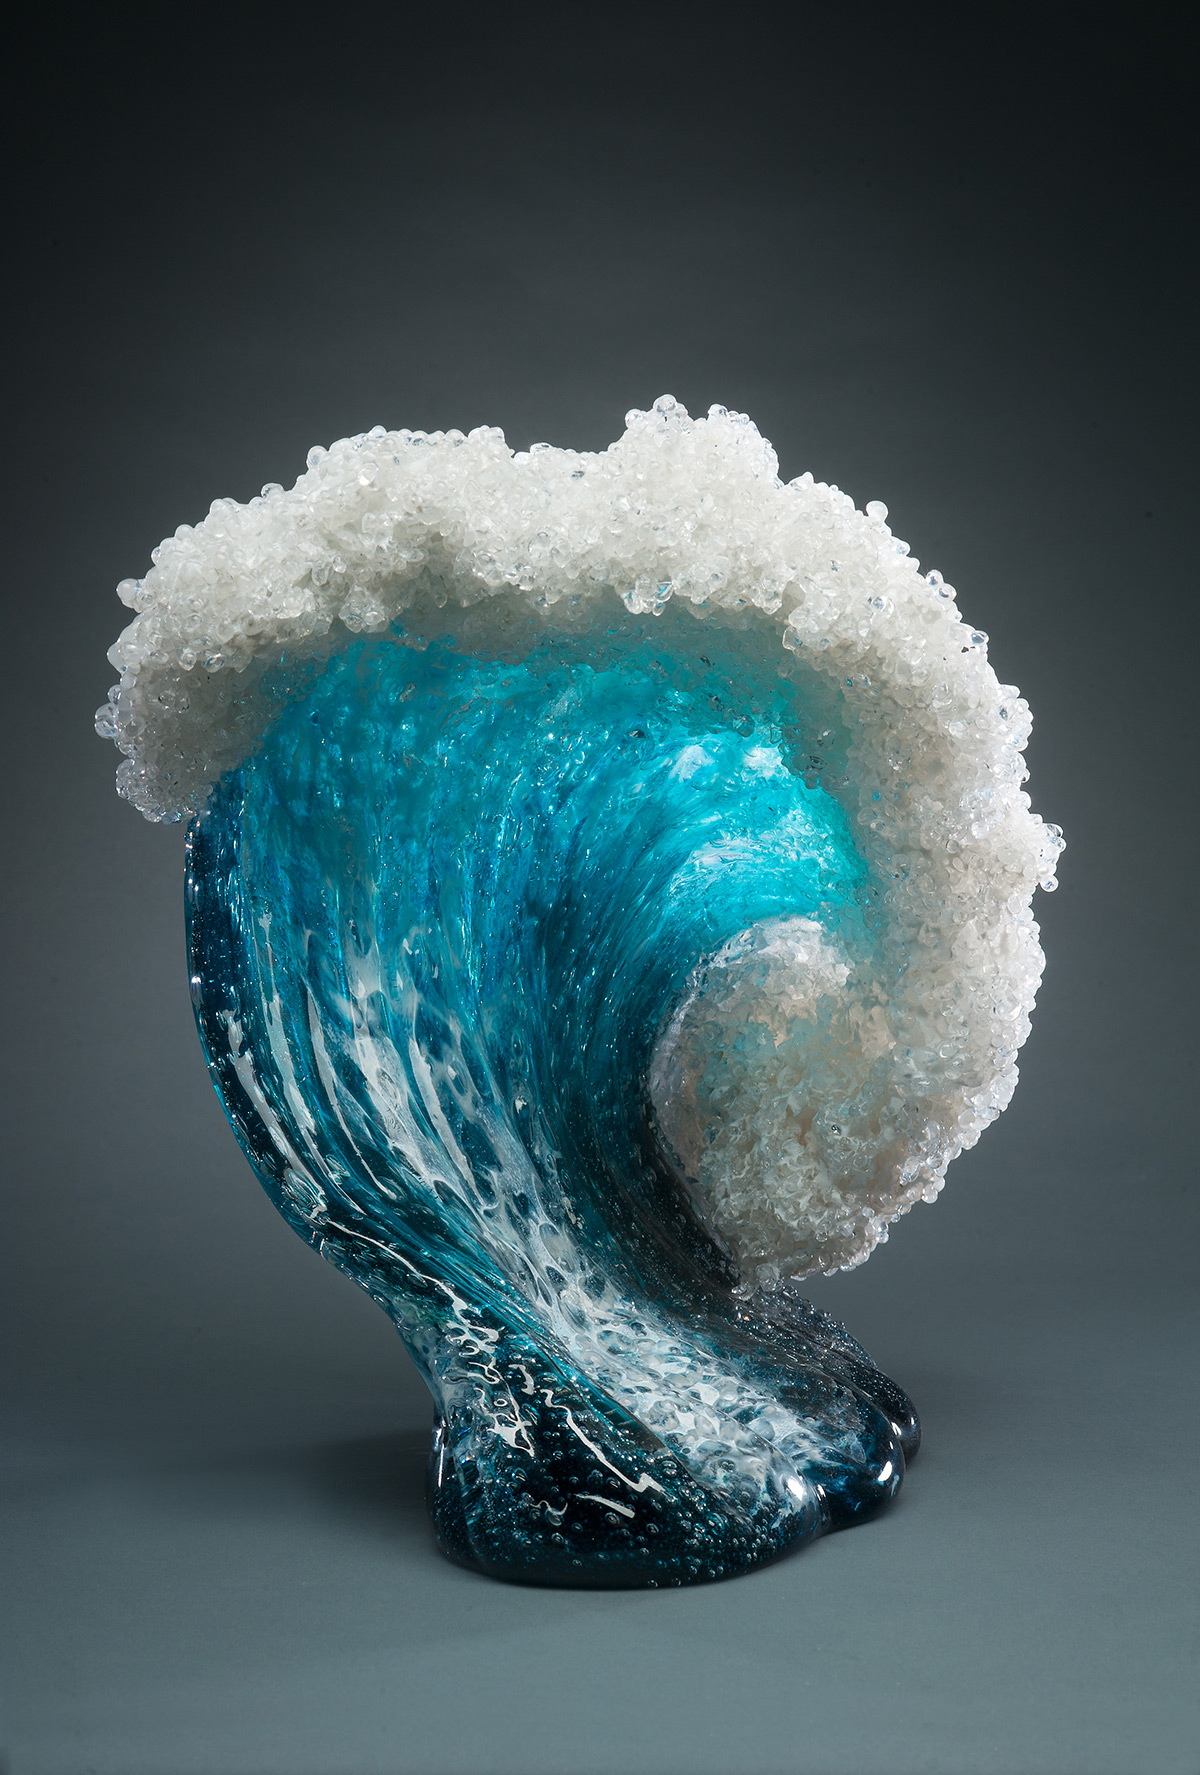 Crashing Glass Waves Frozen